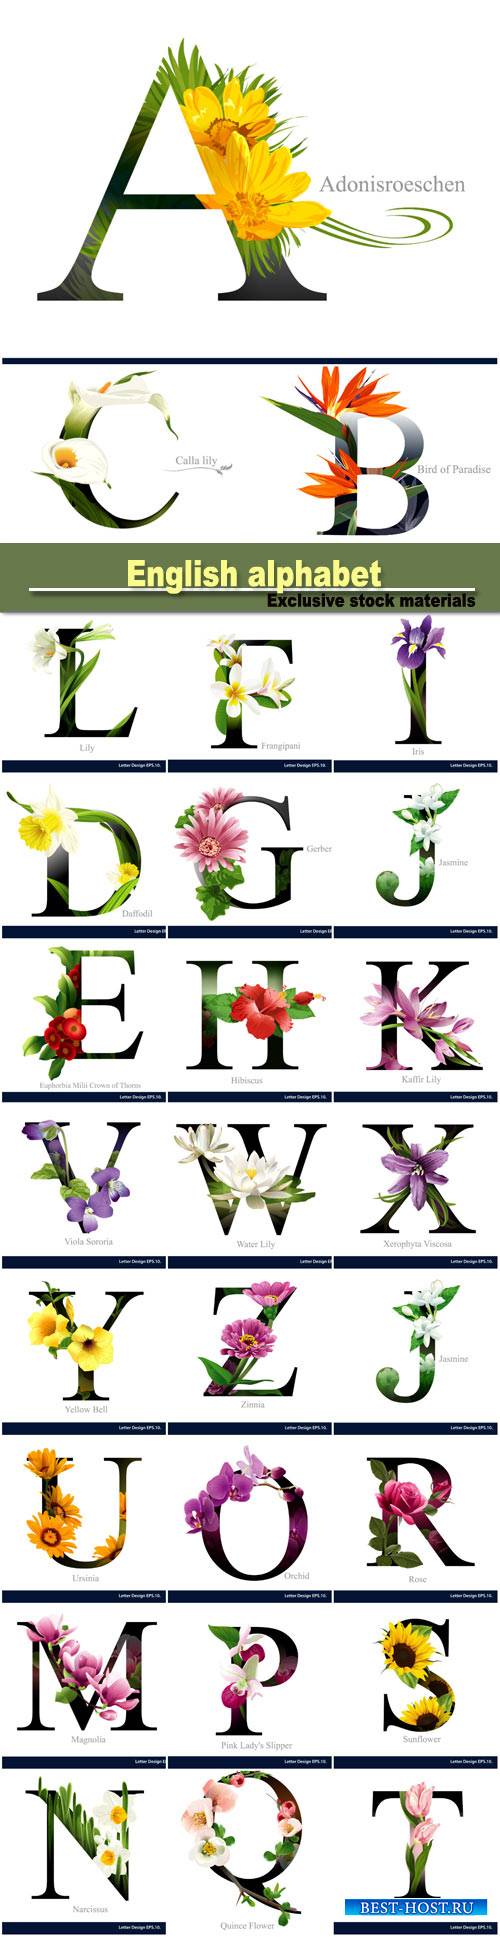 English Alphabet with flowers